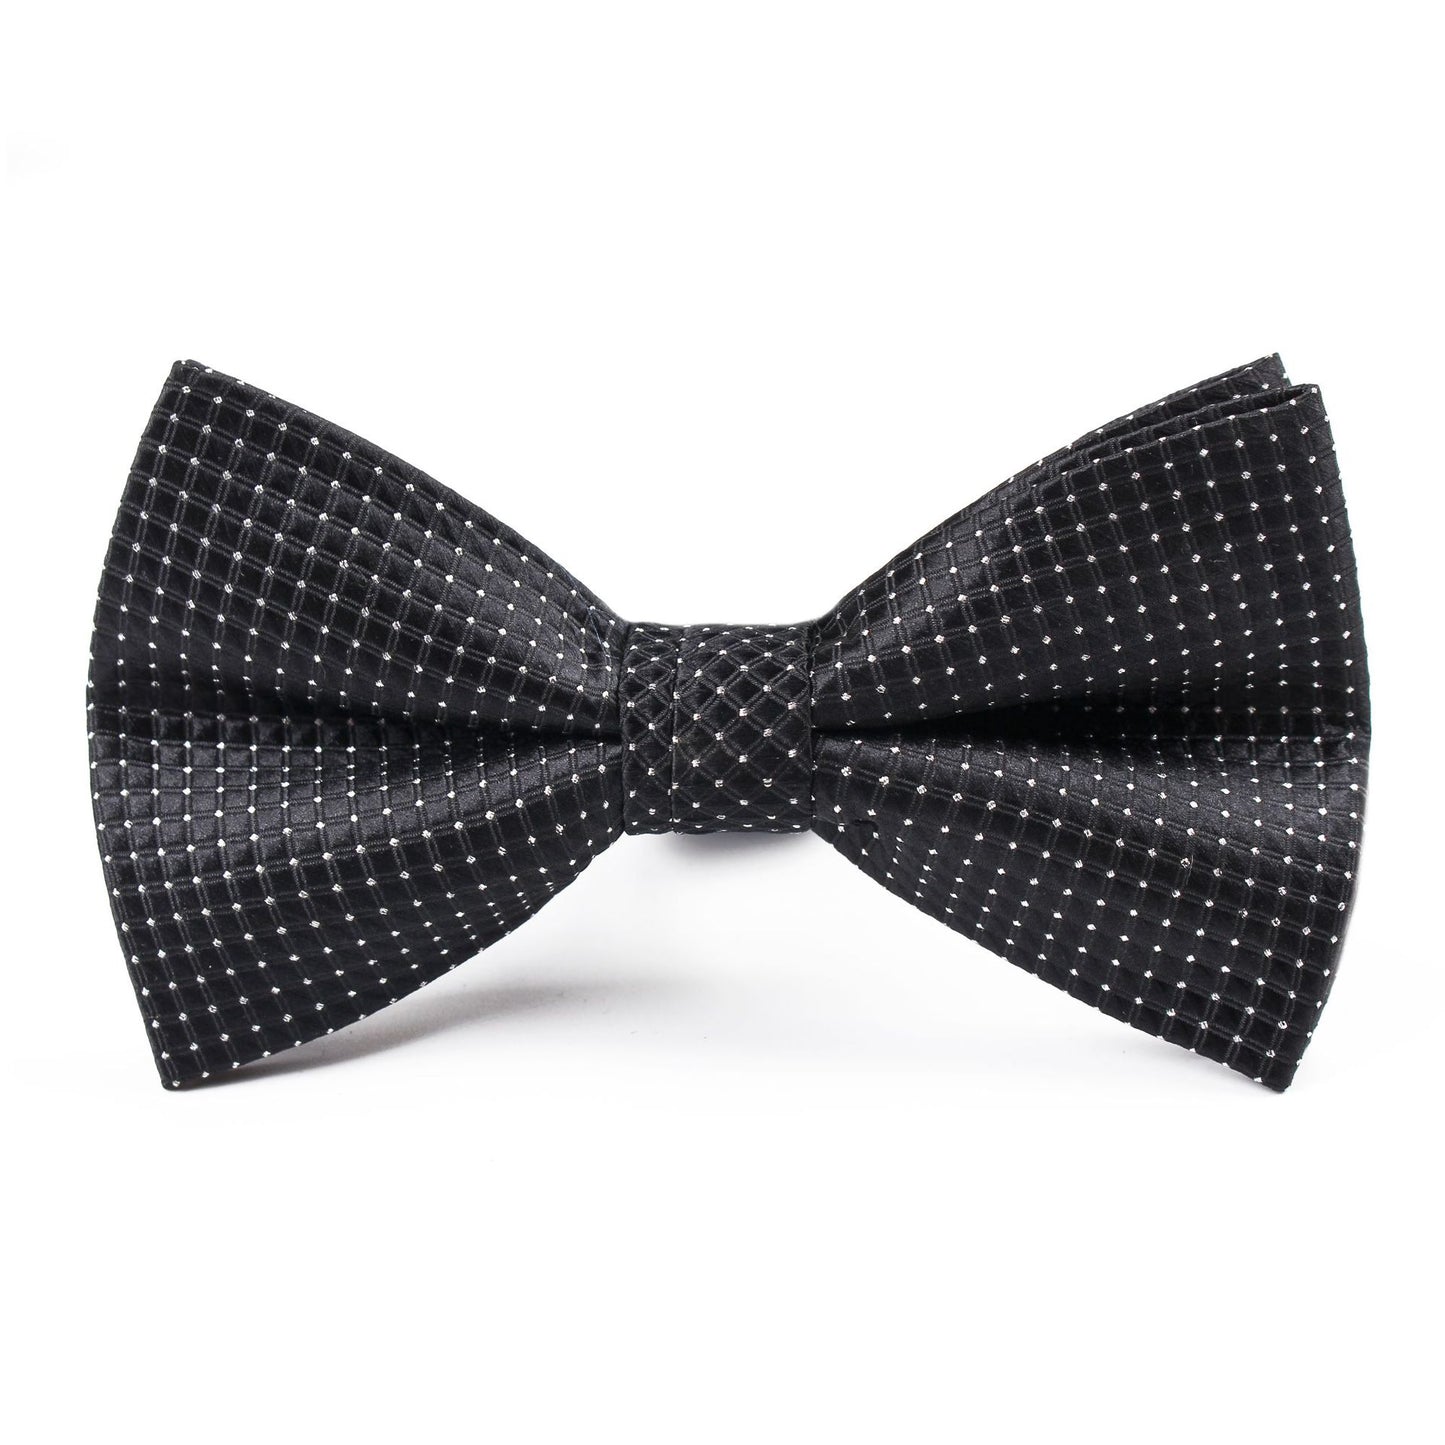 Men's Classic Black Tuxedo Bow Tie